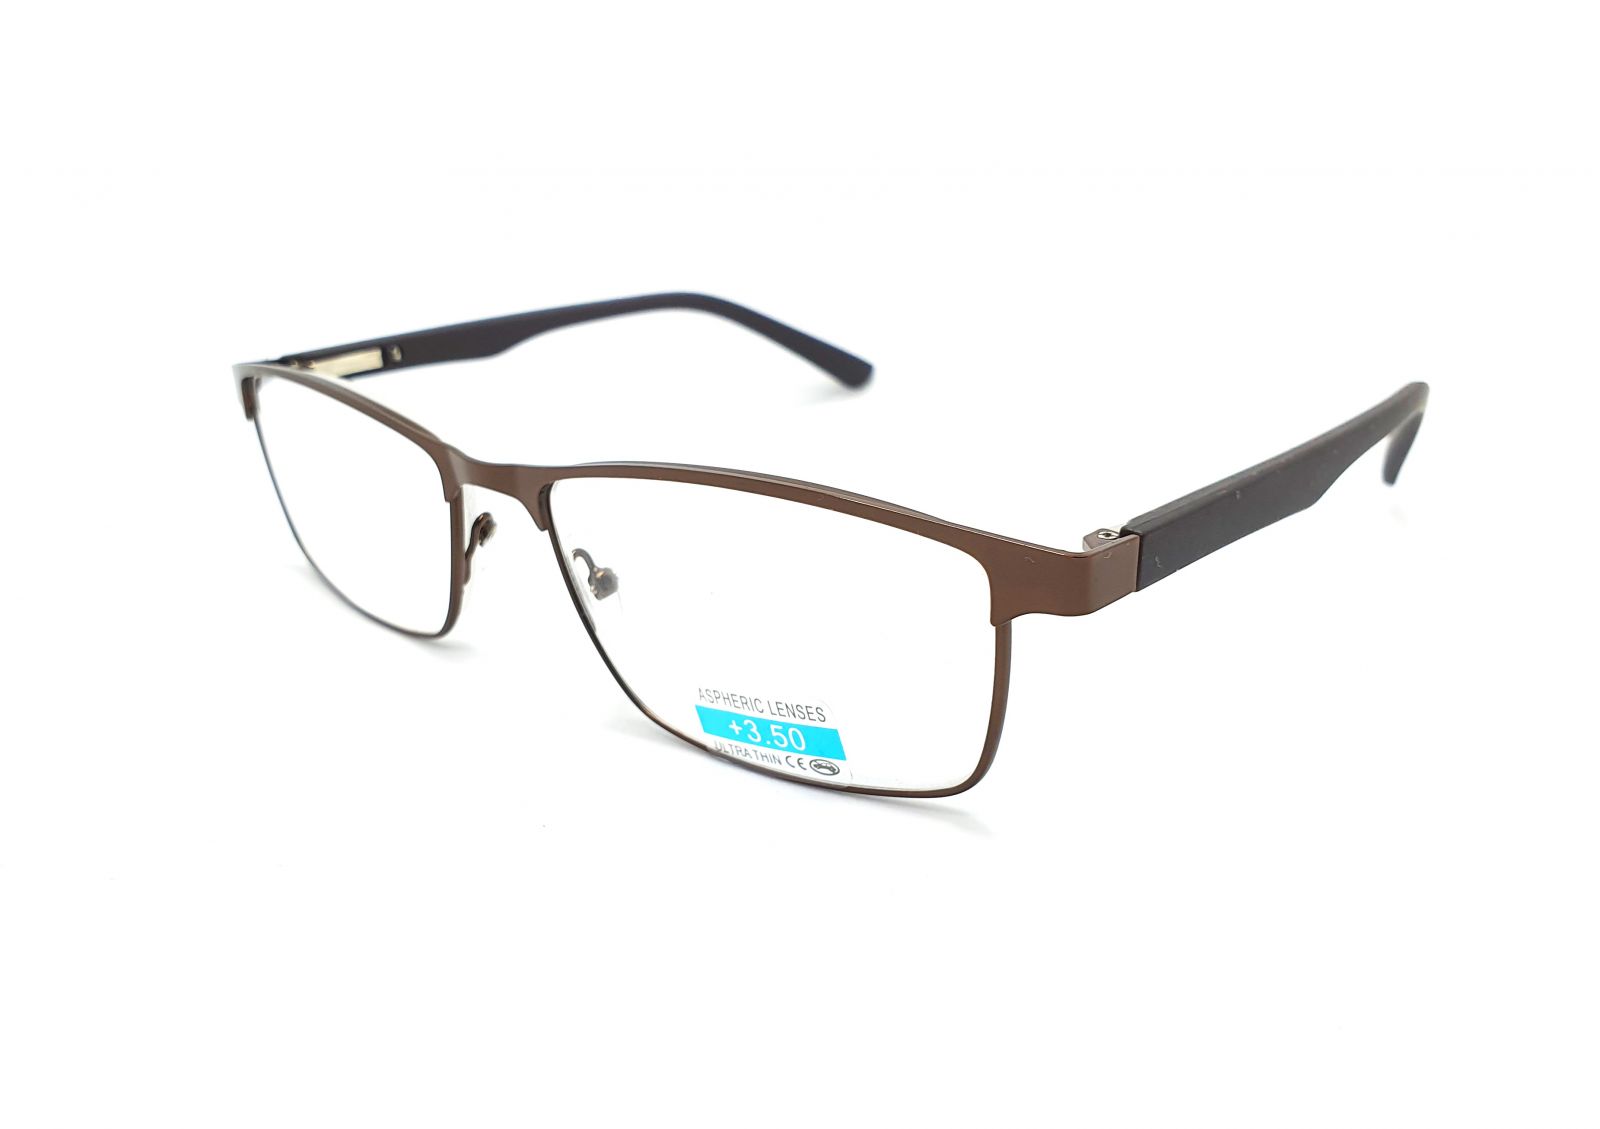 Dioptrické brýle M1.04 / +3,50 s flexem brown